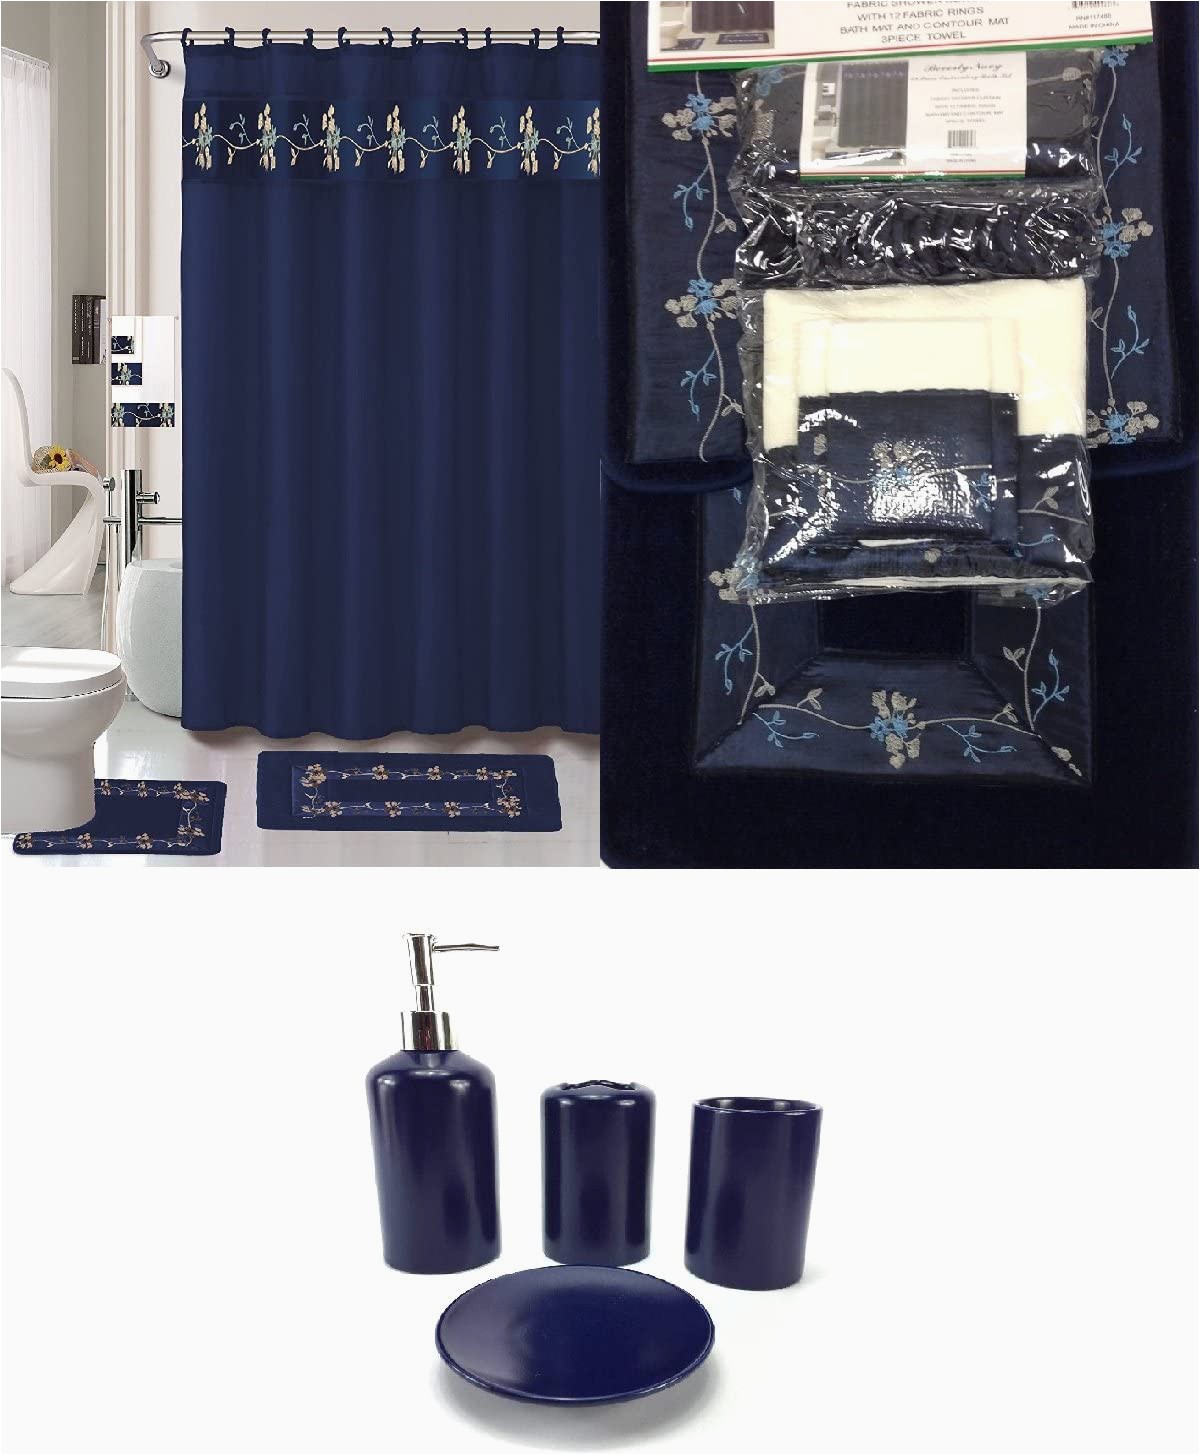 Bathroom Rugs Set Amazon 22 Piece Bath Accessory Set Navy Blue Flower Bathroom Rug Set Shower Curtain & Accessories